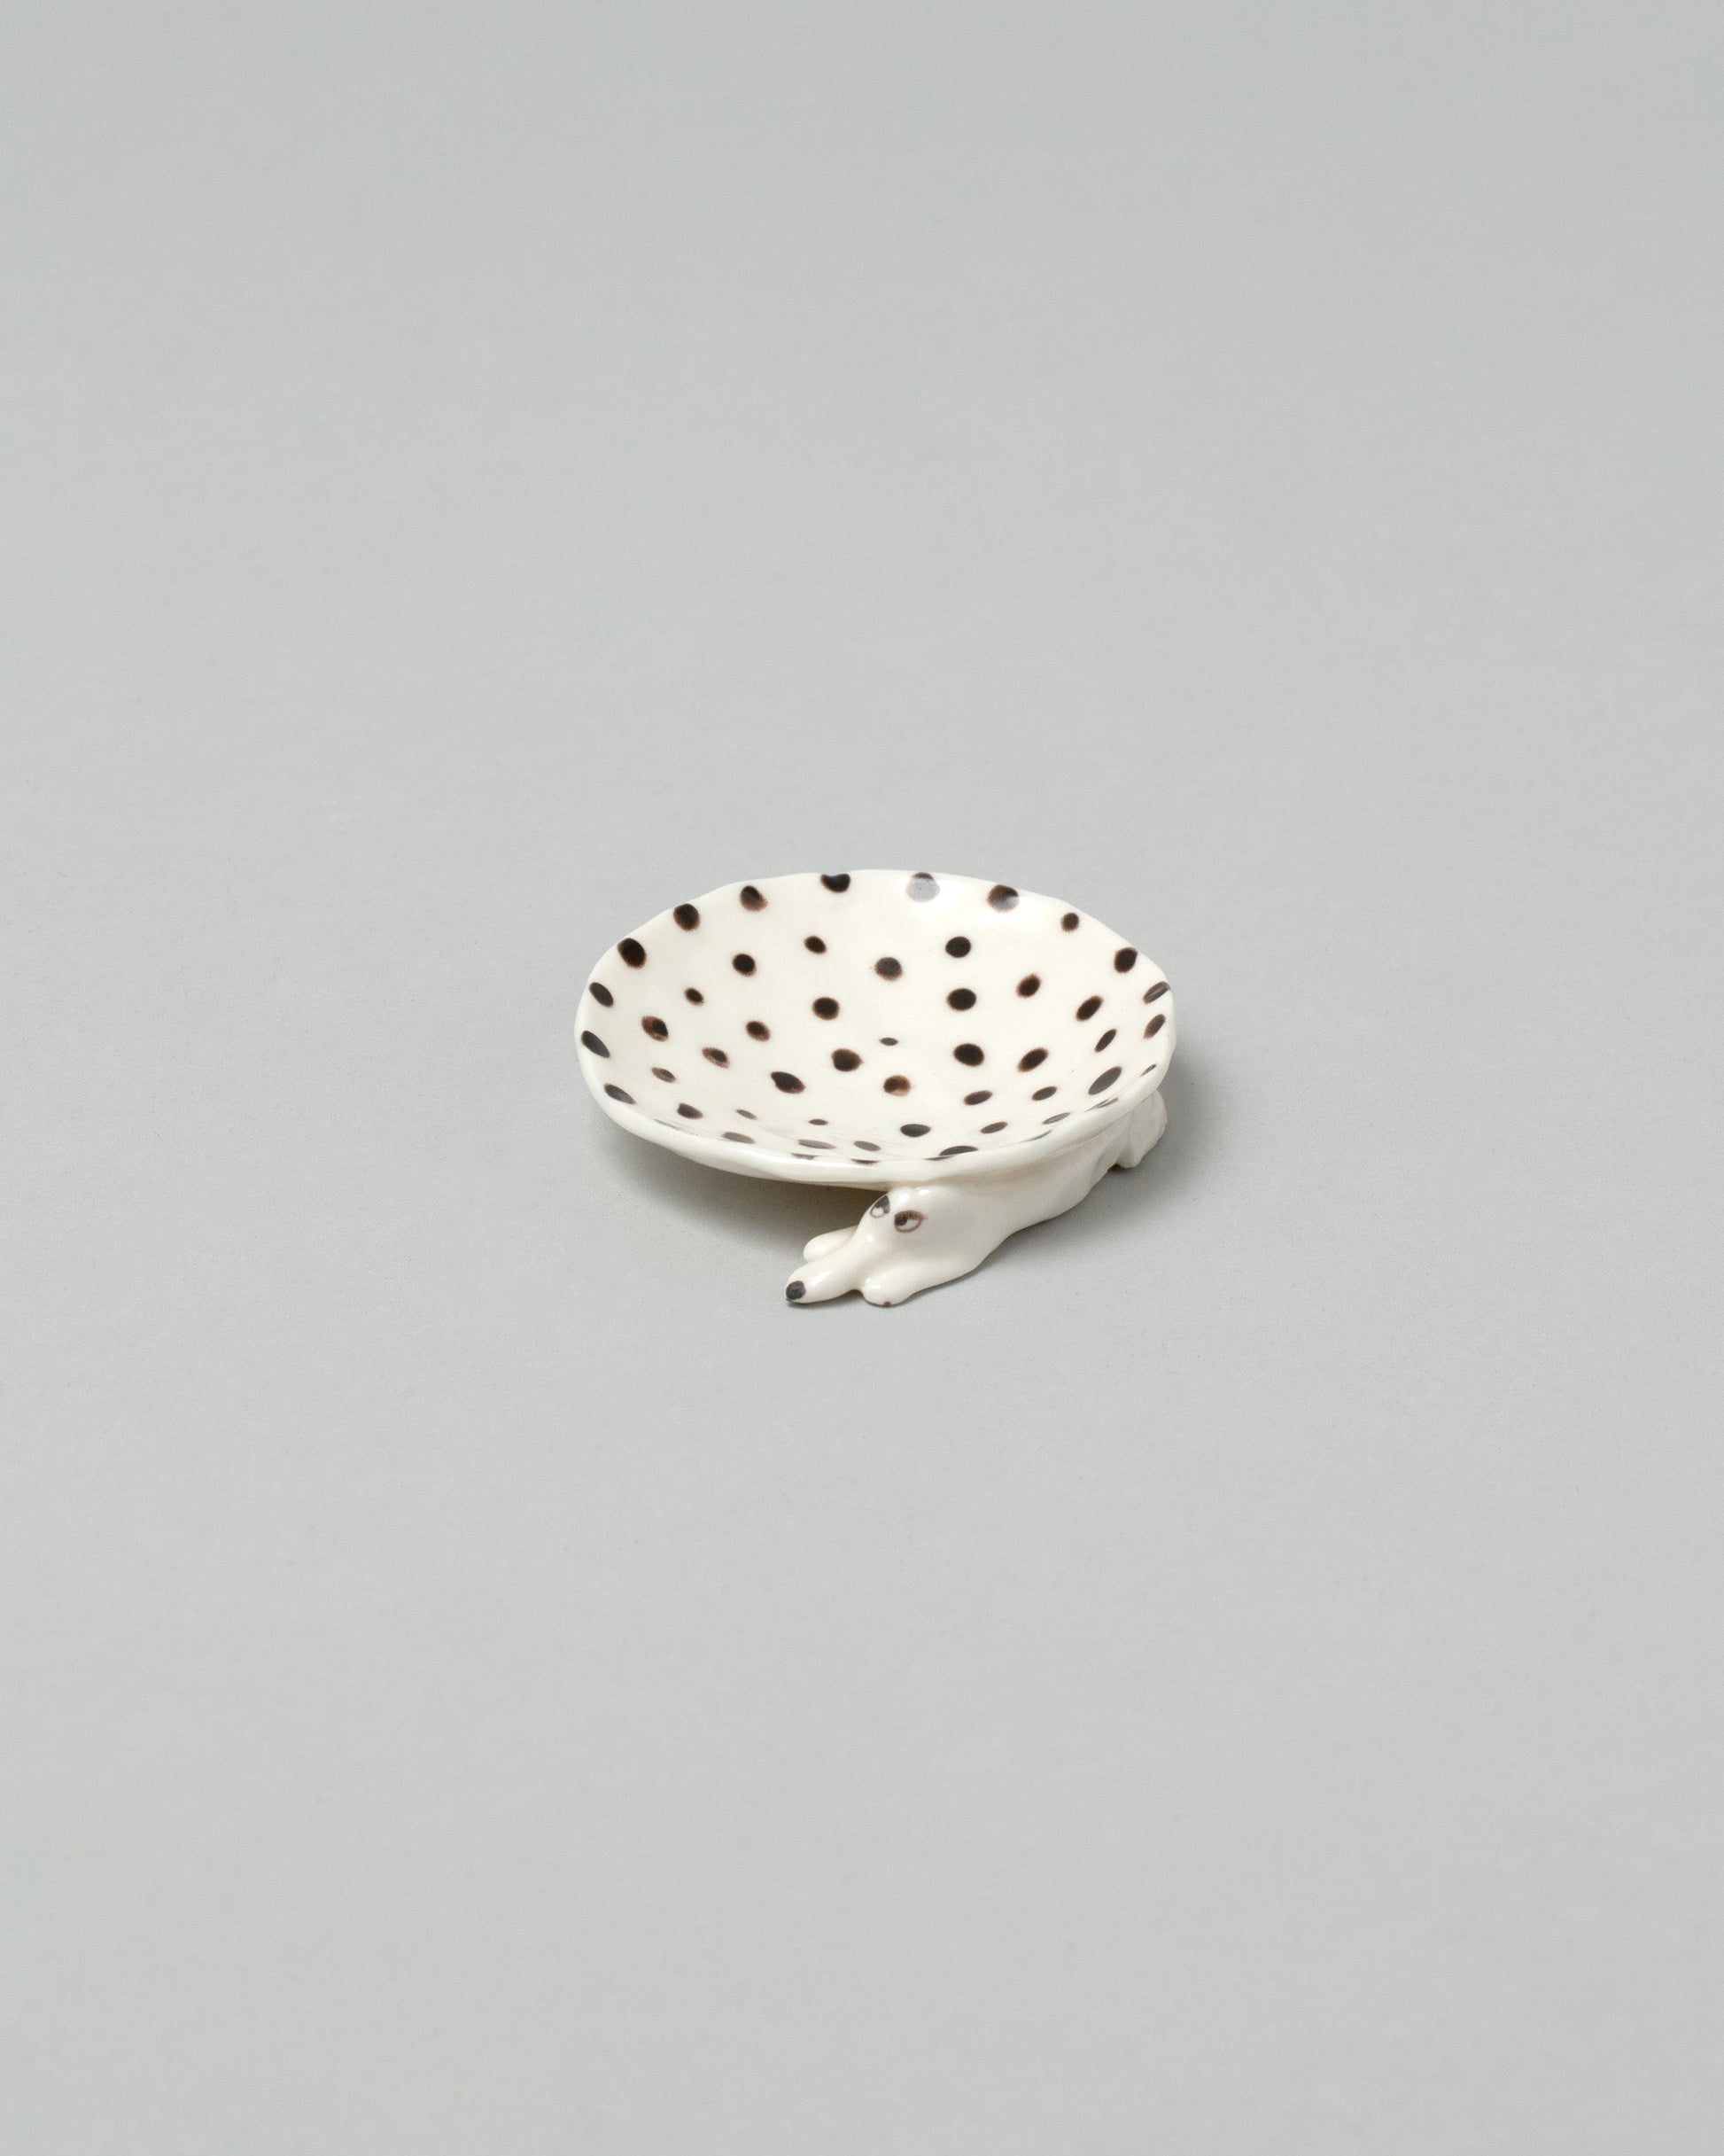 Eleonor Boström Black Dots Mini Dog Dish on light color background.